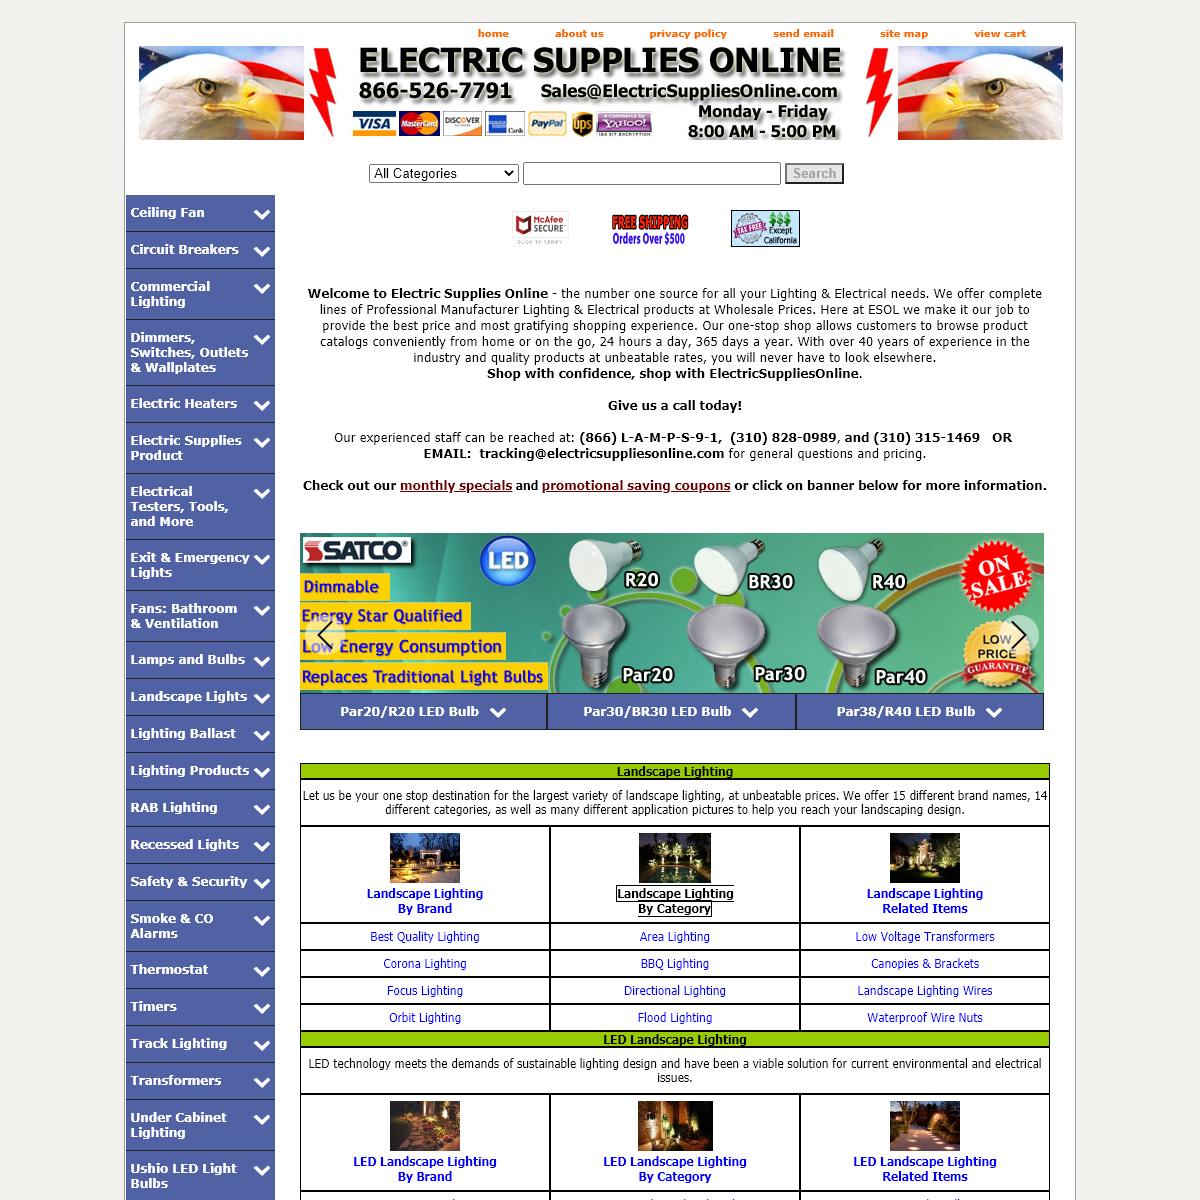 A complete backup of electricsuppliesonline.com